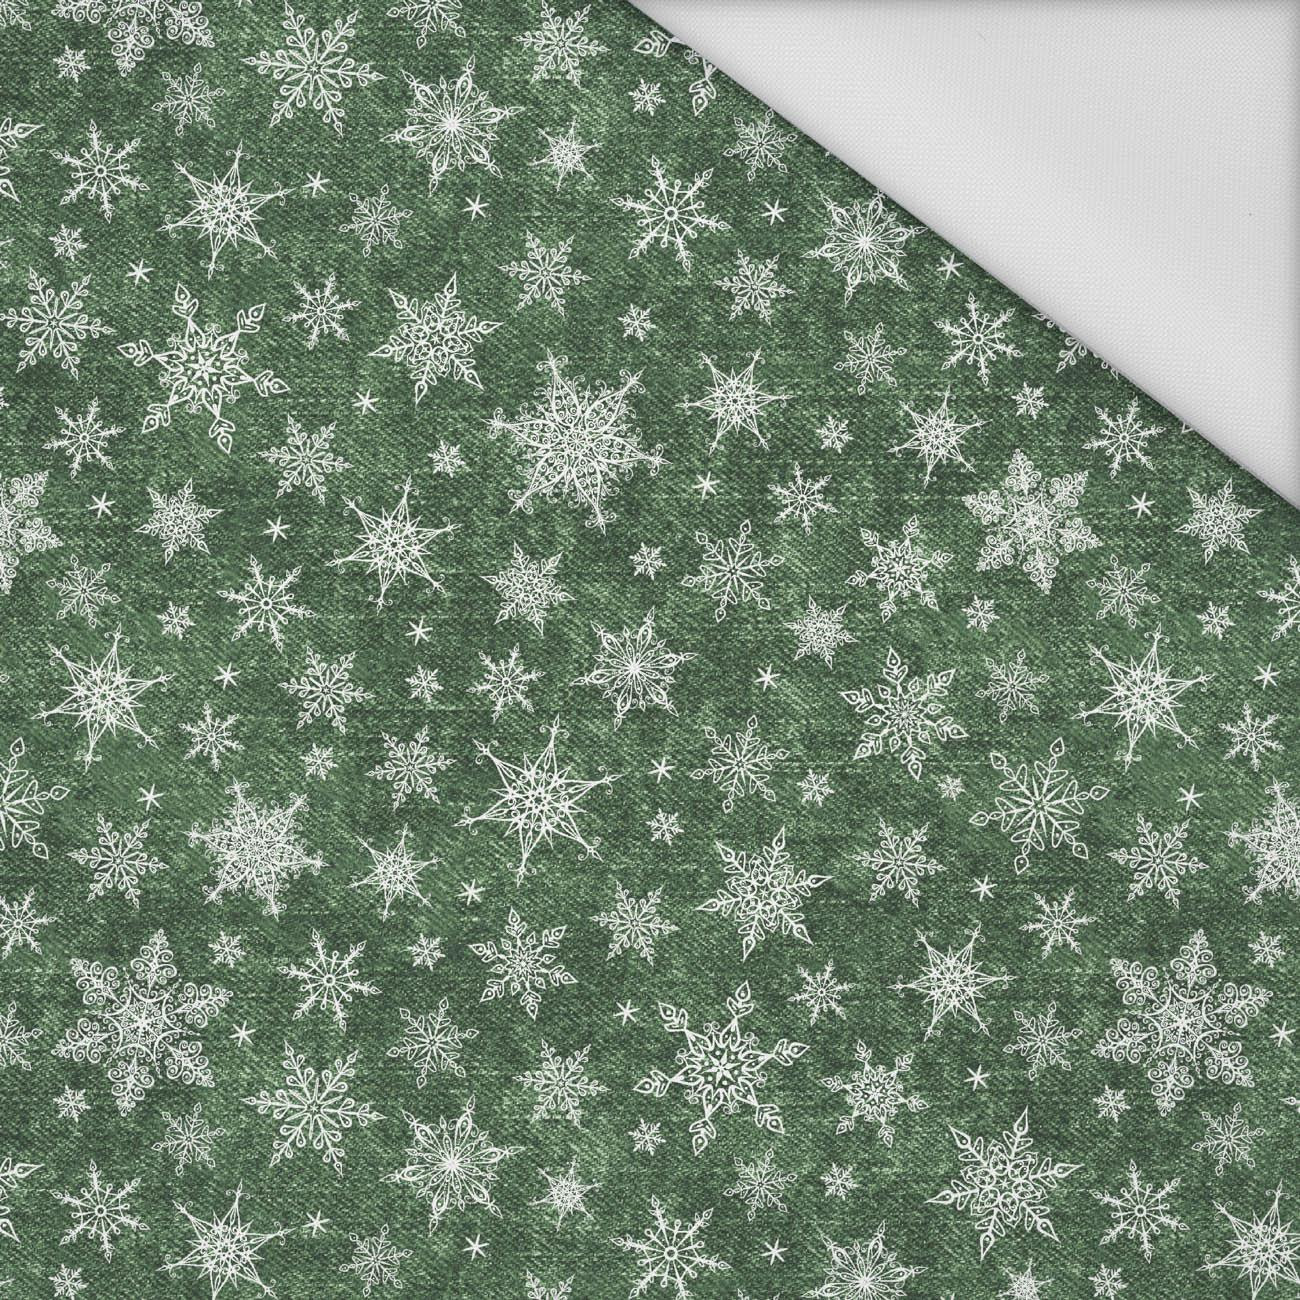 SNOWFLAKES PAT. 2 / ACID WASH BOTTLE GREEN - Waterproof woven fabric